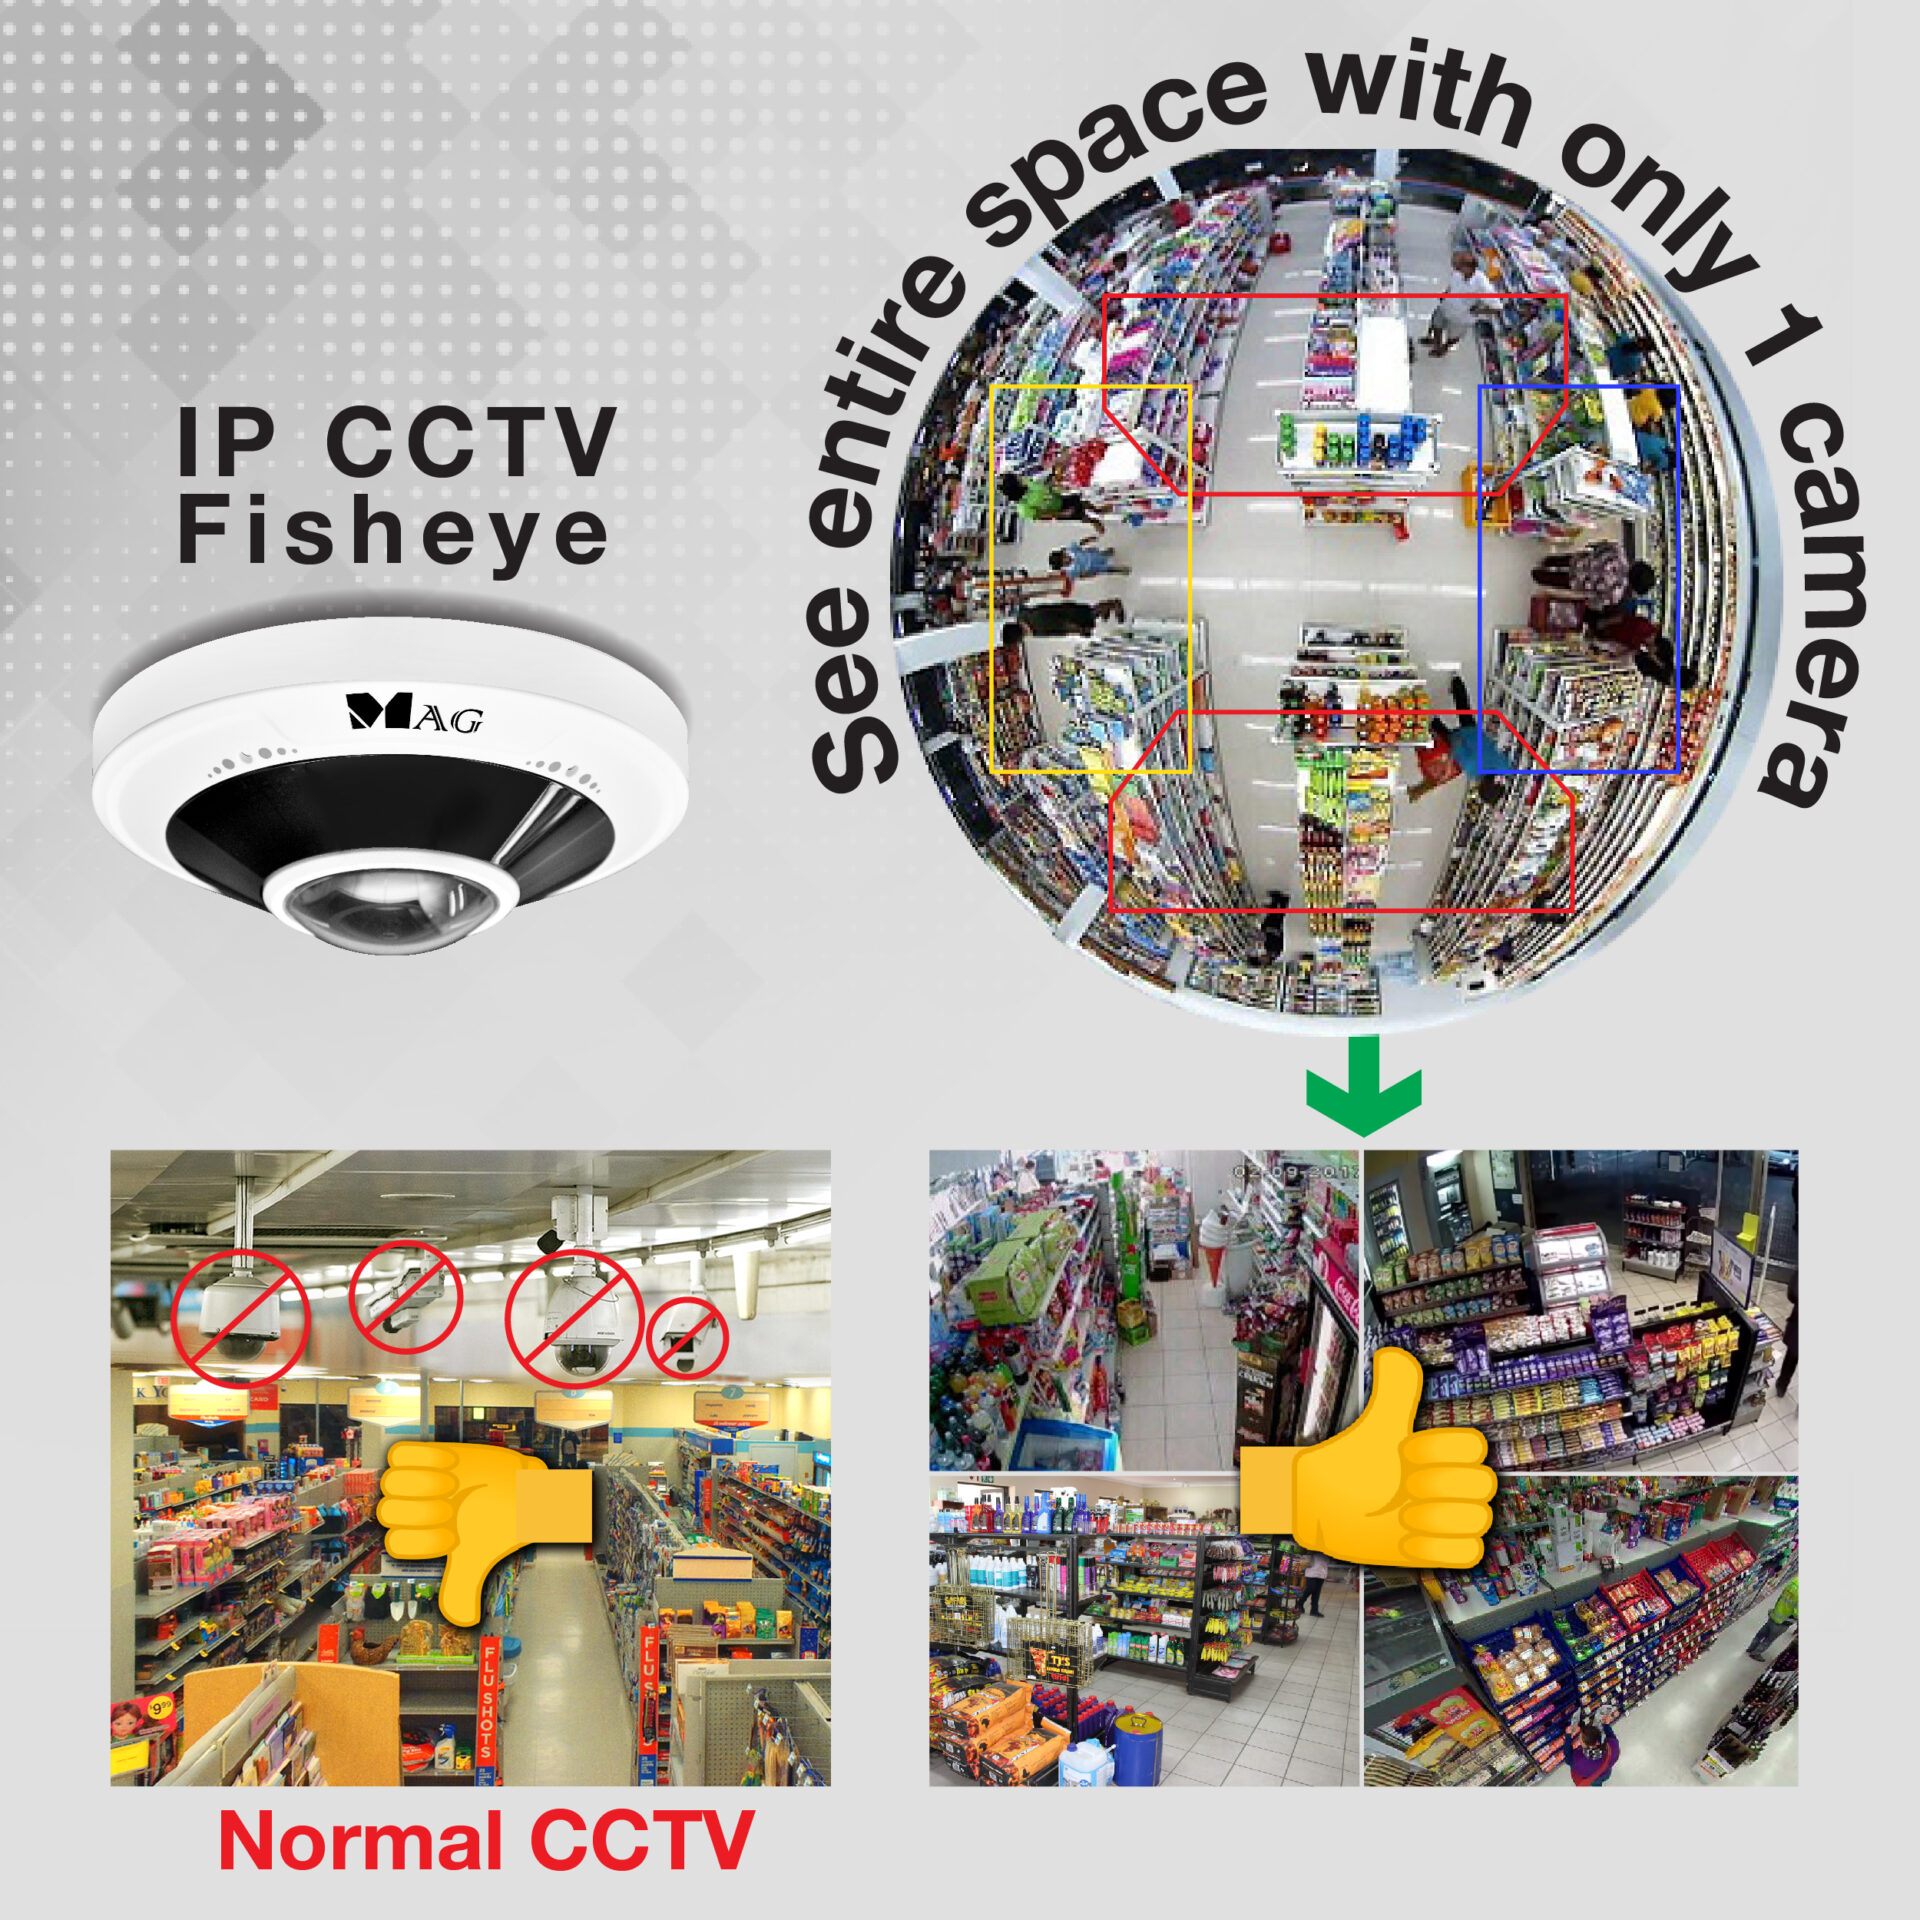 IP CCTV fisheye